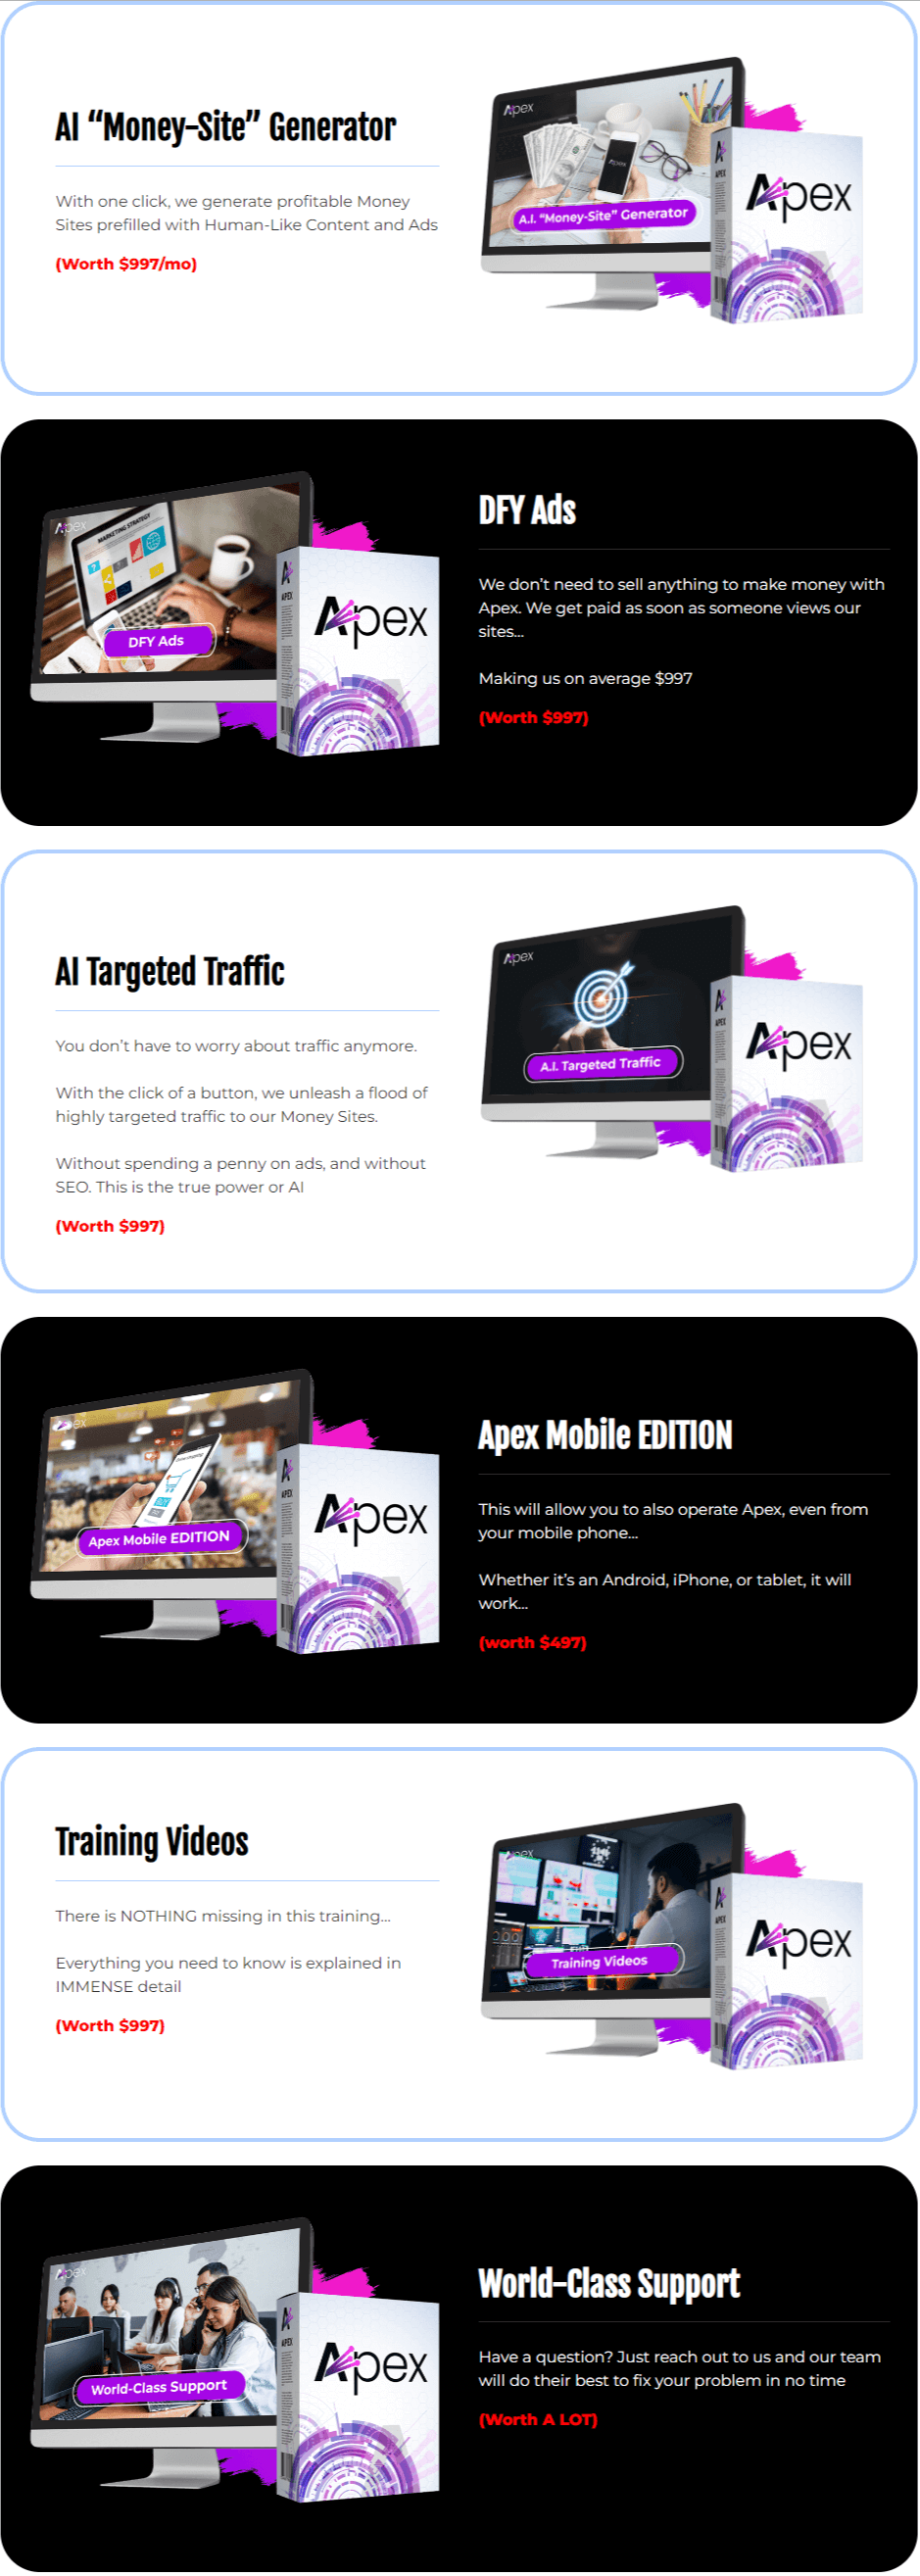 Apex-App-Review-Features.